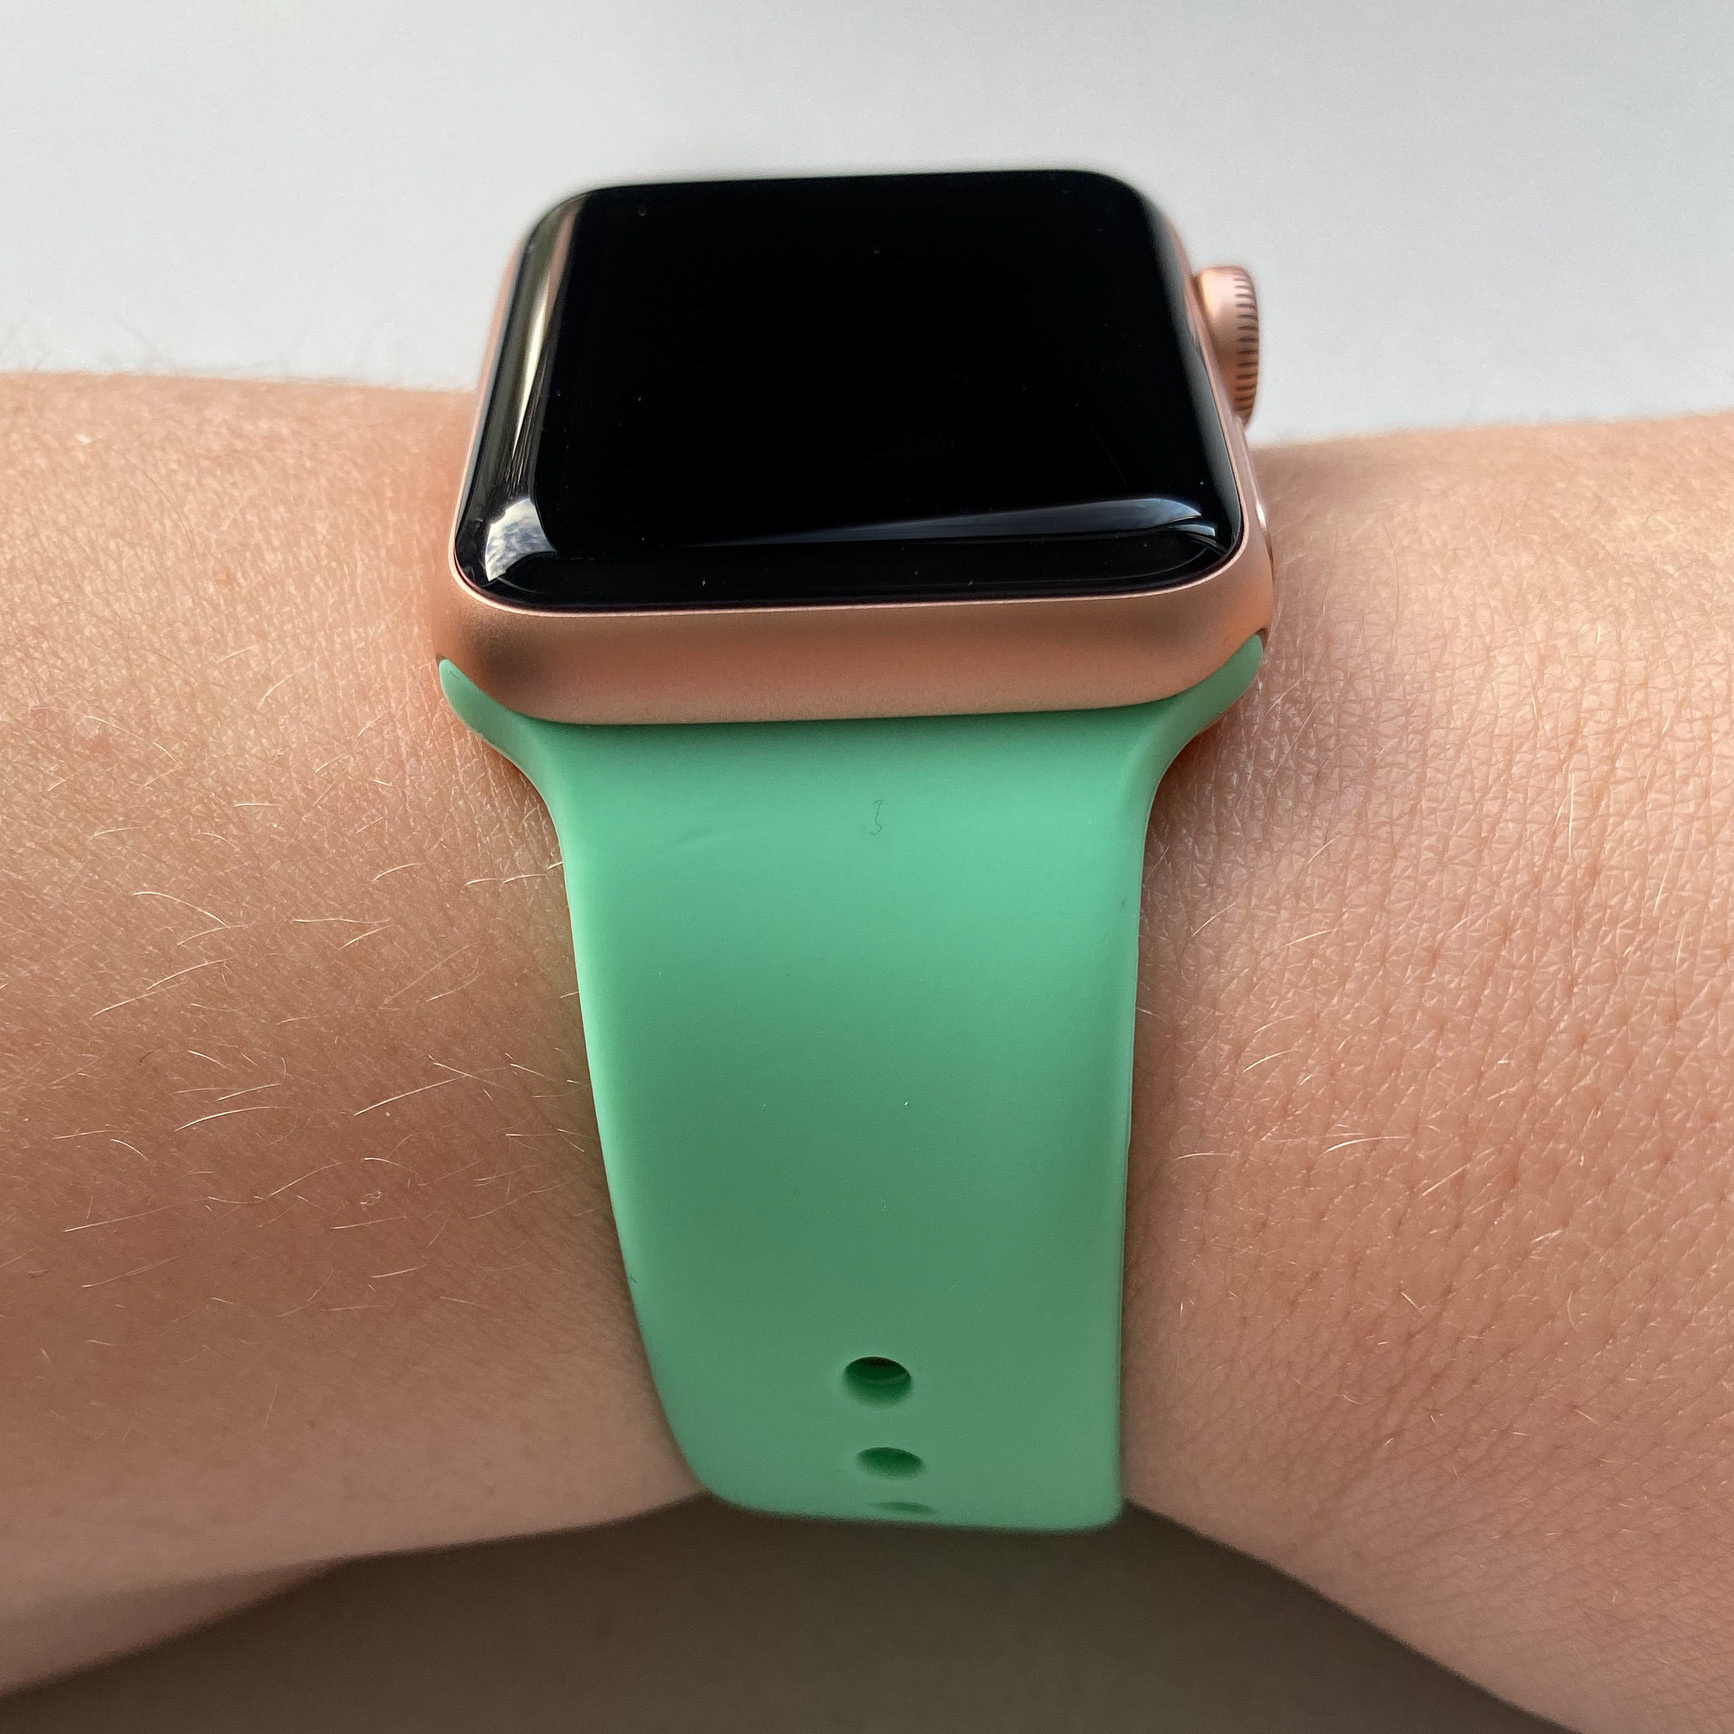 Apple Watch Sportarmband - Minze